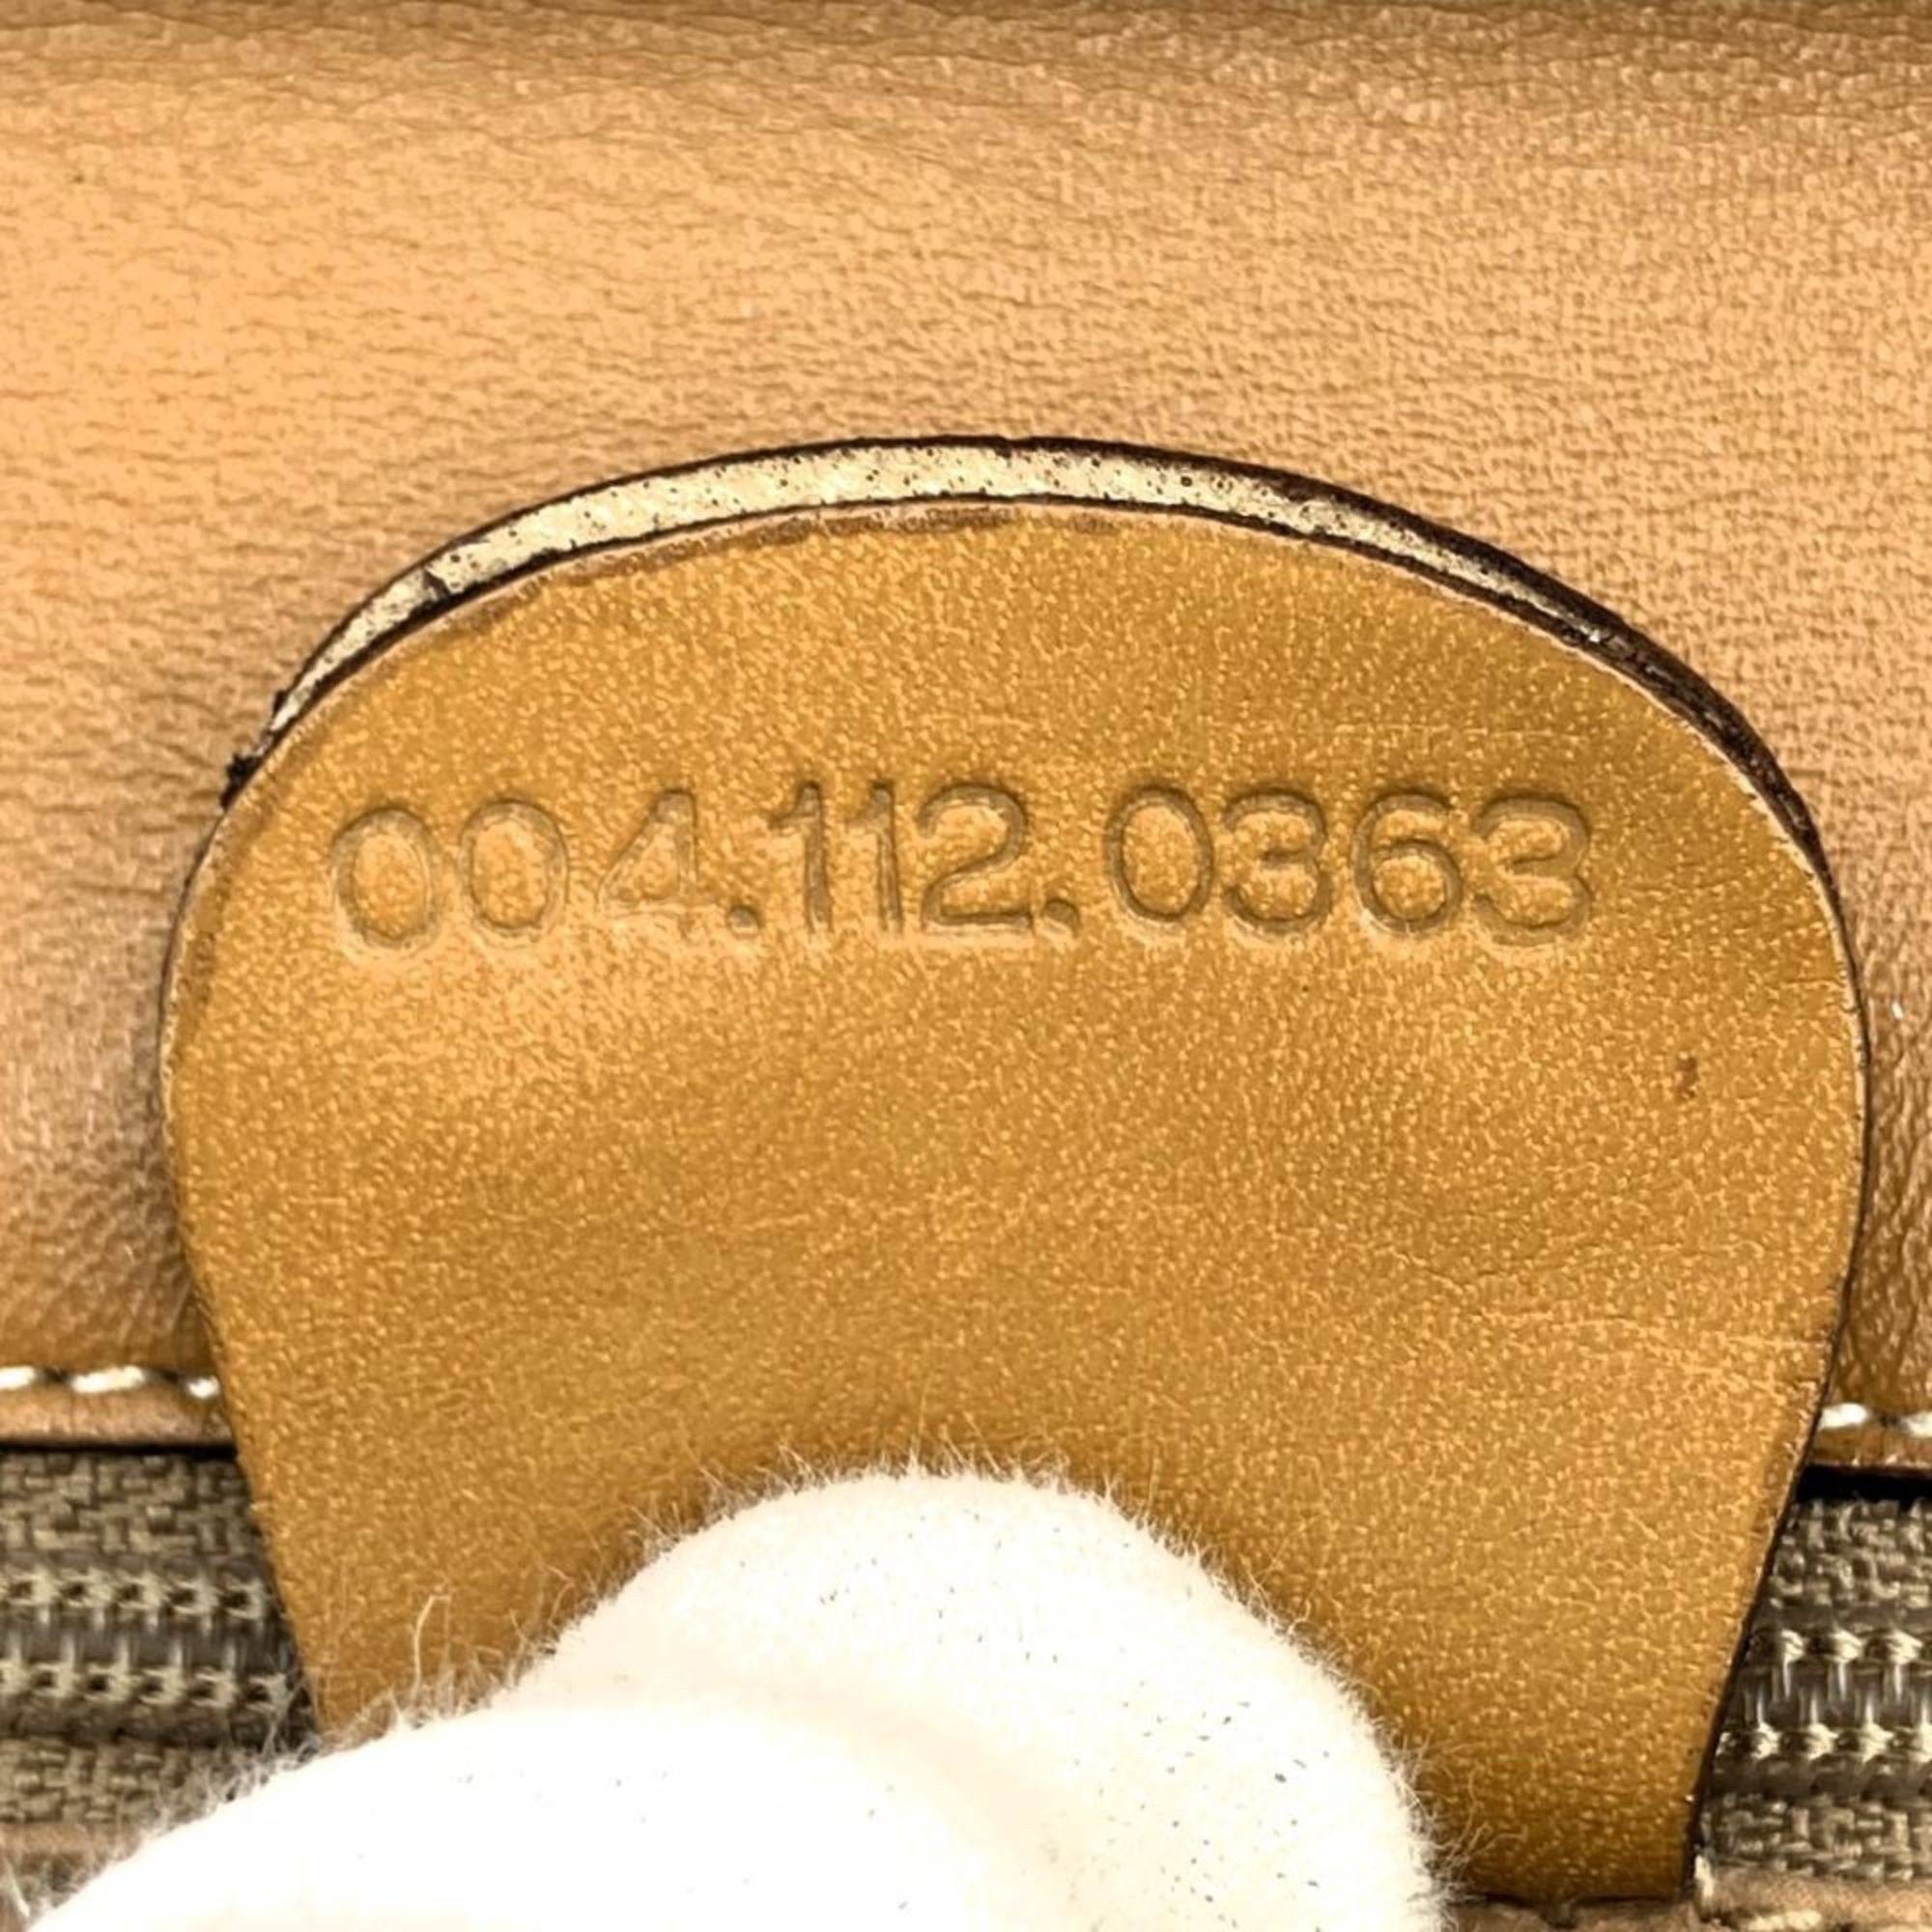 GUCCI 004 112 0363 Shoulder Bag Pochette Micro GG Supreme Canvas Leather Beige Camel Women's